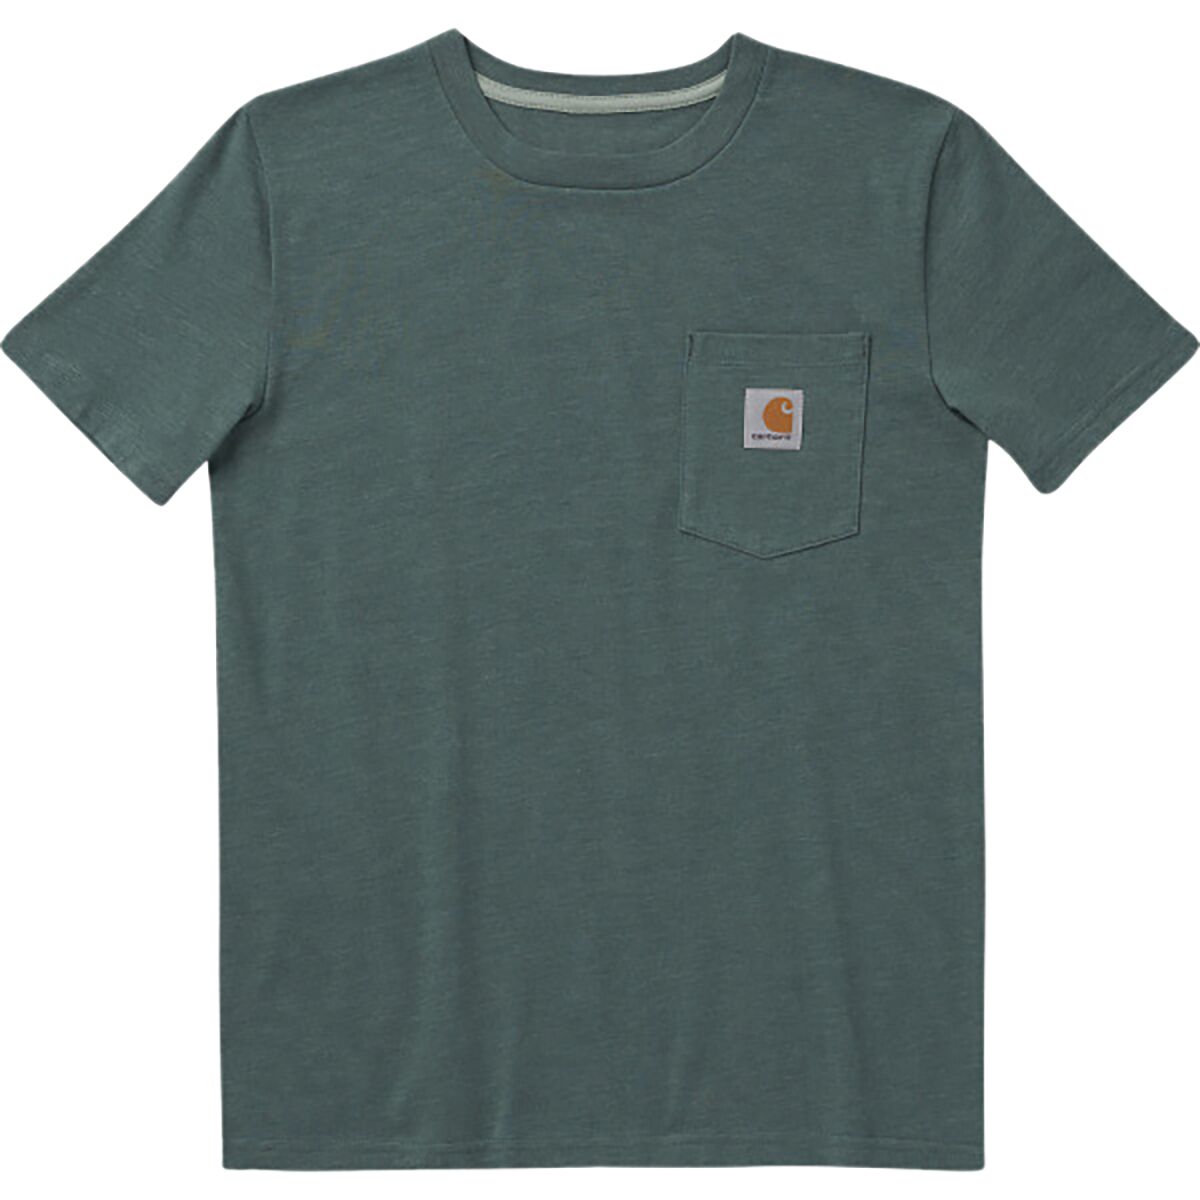 Carhartt Wilderness Short-Sleeve Graphic T-Shirt - Toddlers'